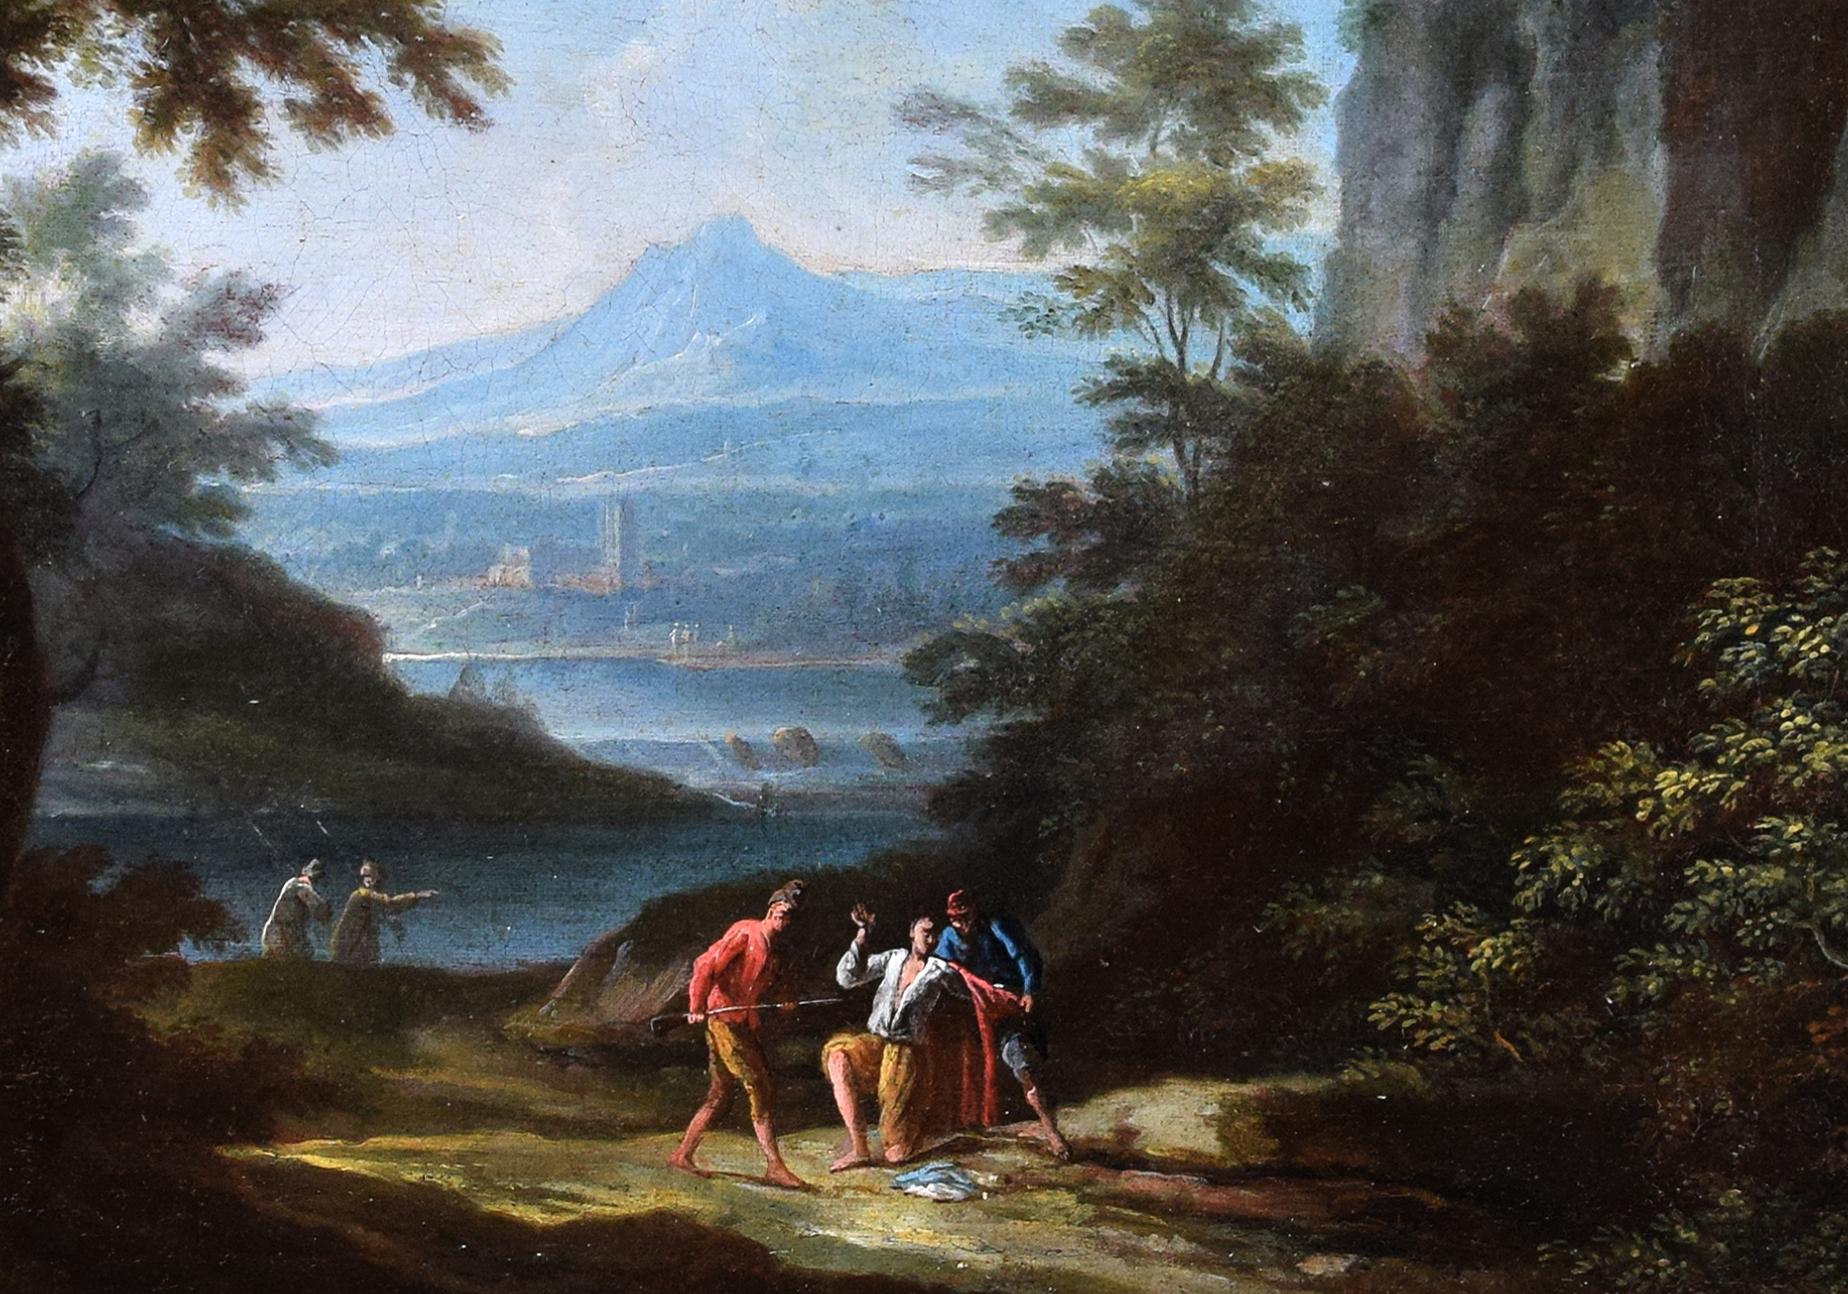 Two Arcadic Landscapes - J.F. Van Bloemen (follower of) - Oil on Canvas  - Painting by Jan Frans van Bloemen (Orizzonte)